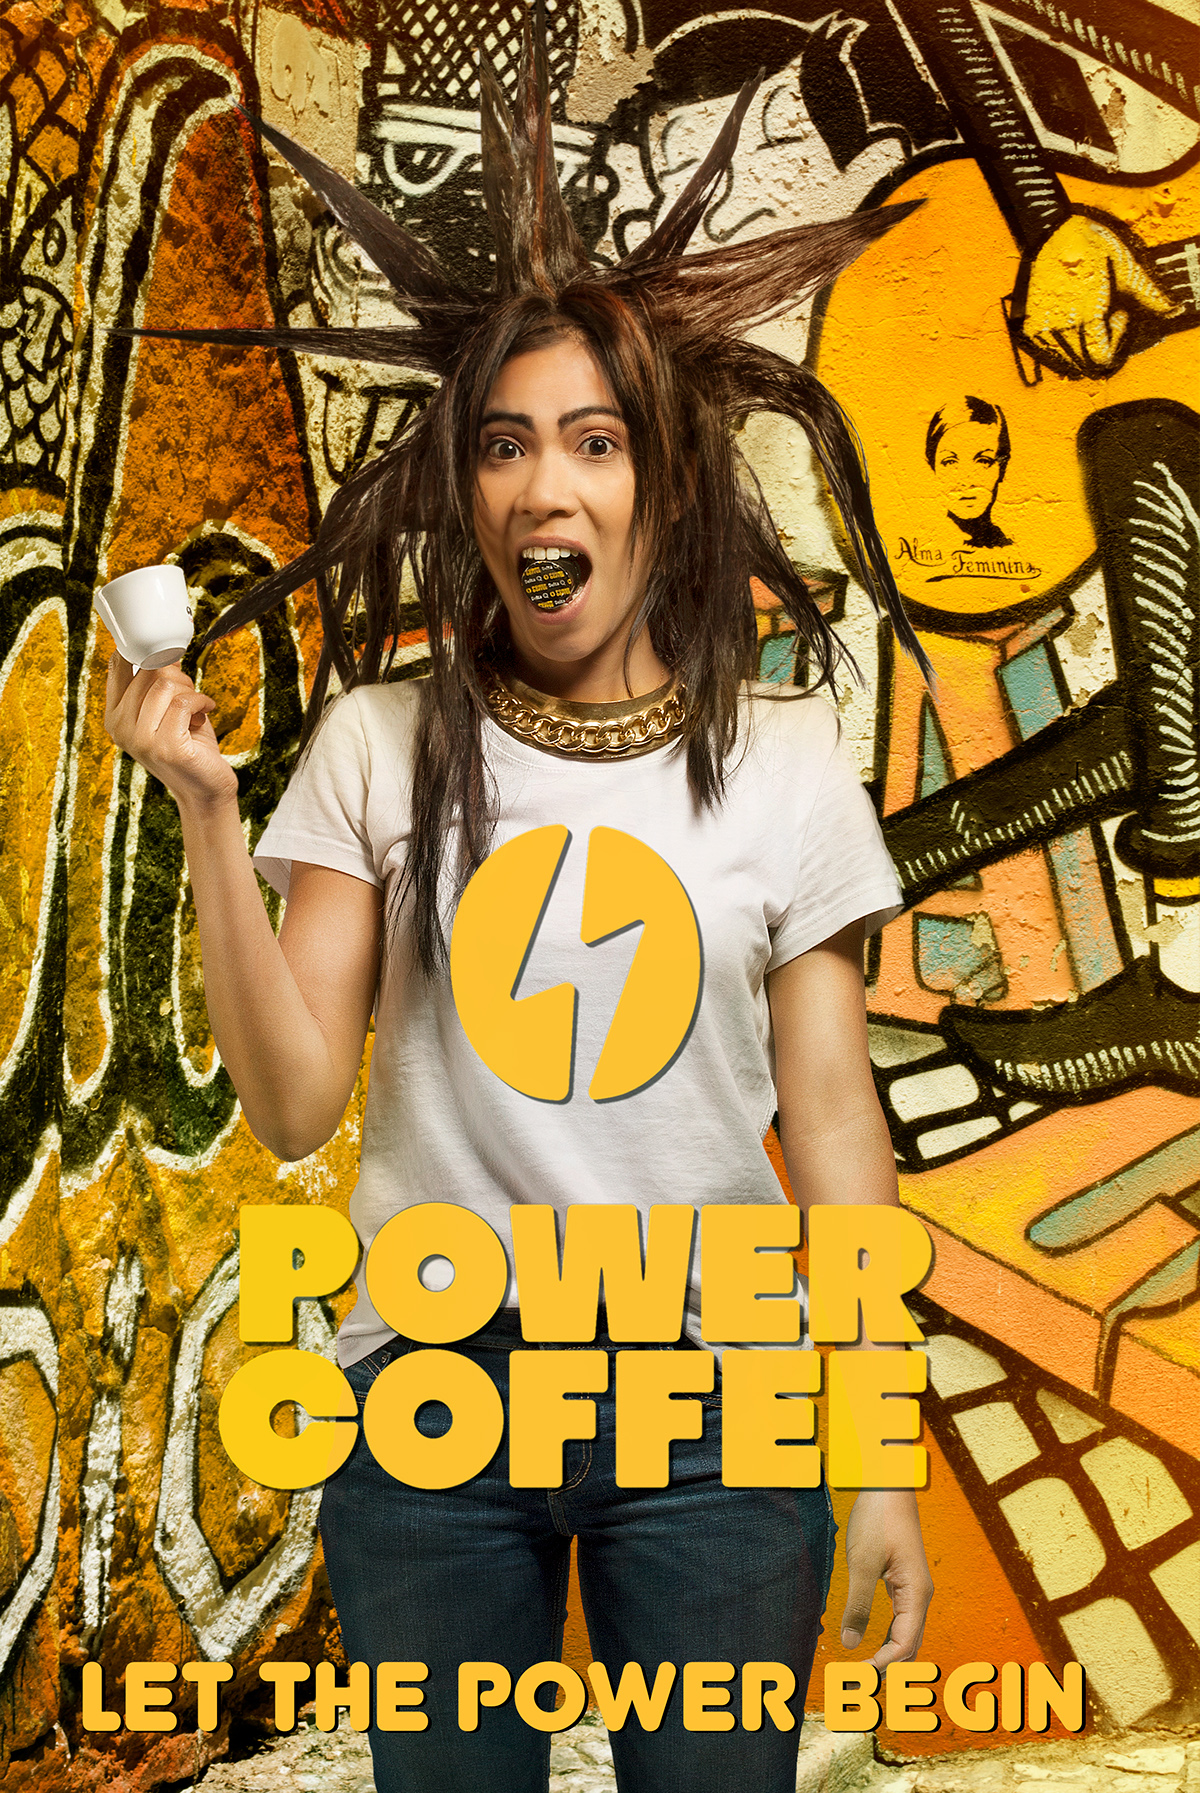 power Coffee Power coffee powercoffee drink energy Delta Delta Cafés cafe expresso Double Coffee double american bomb